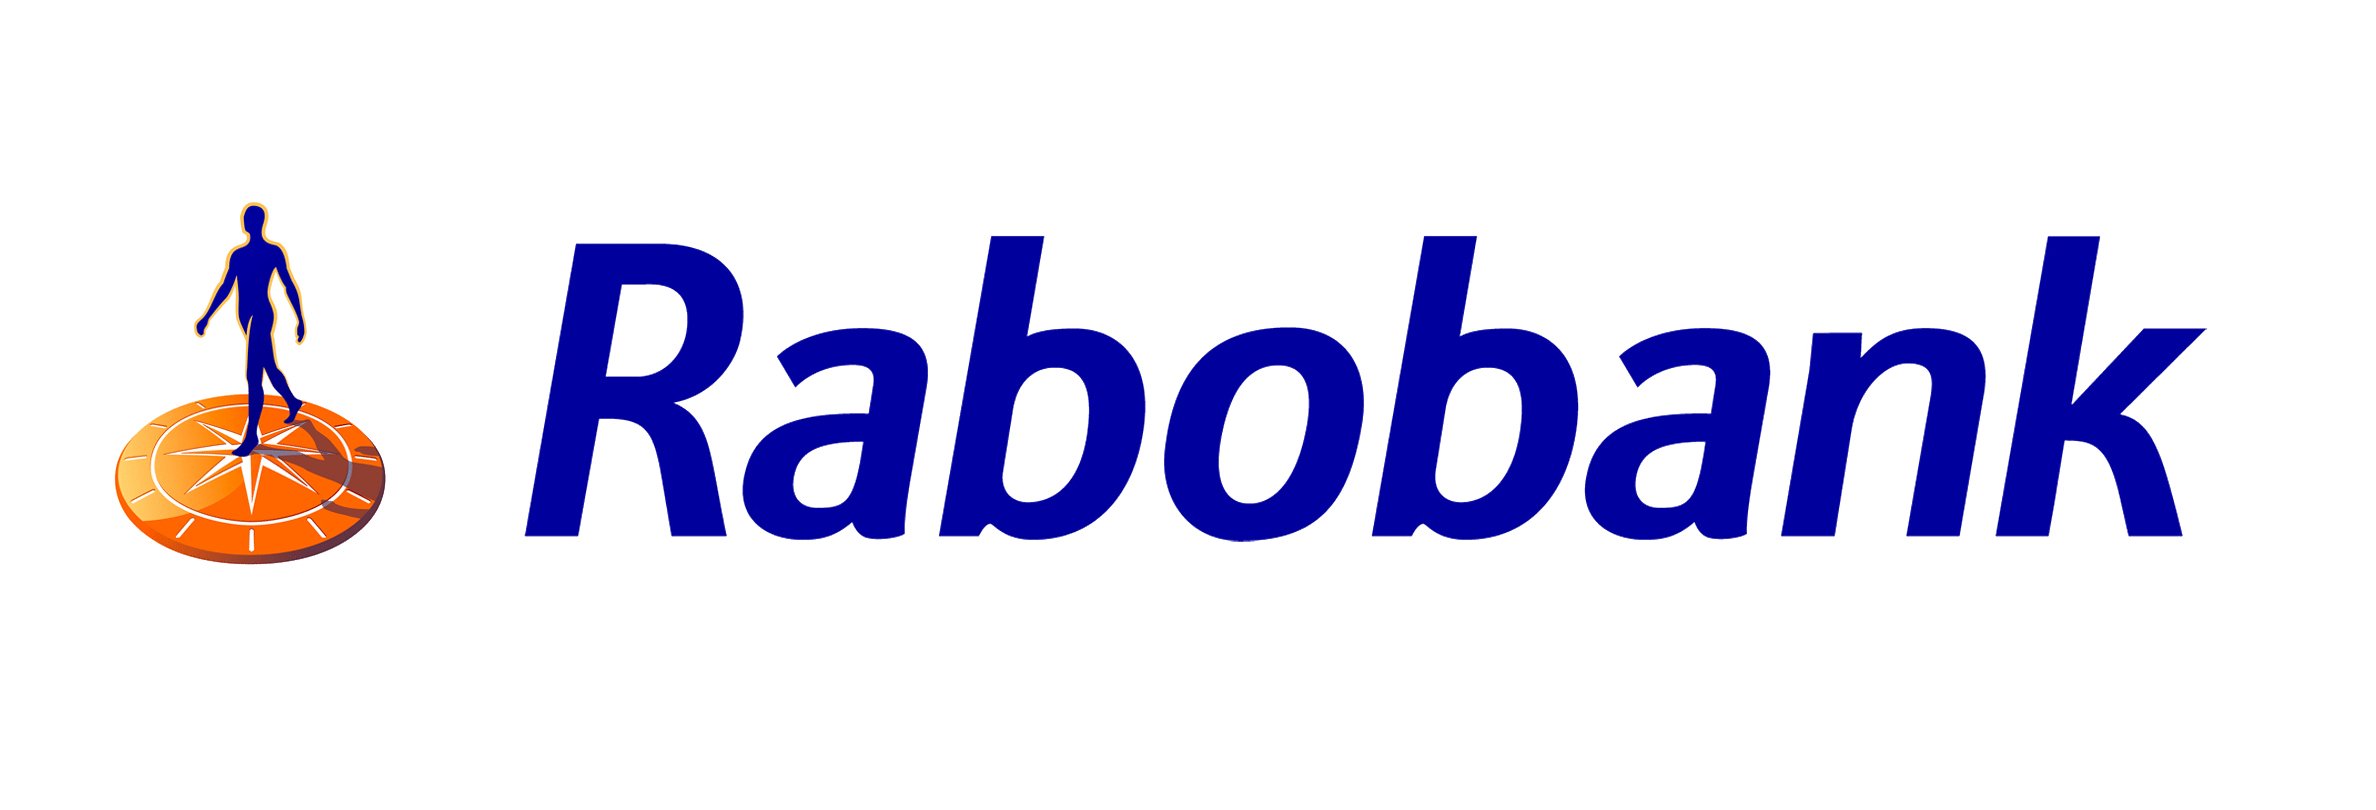 Rabobank-logo.jpg